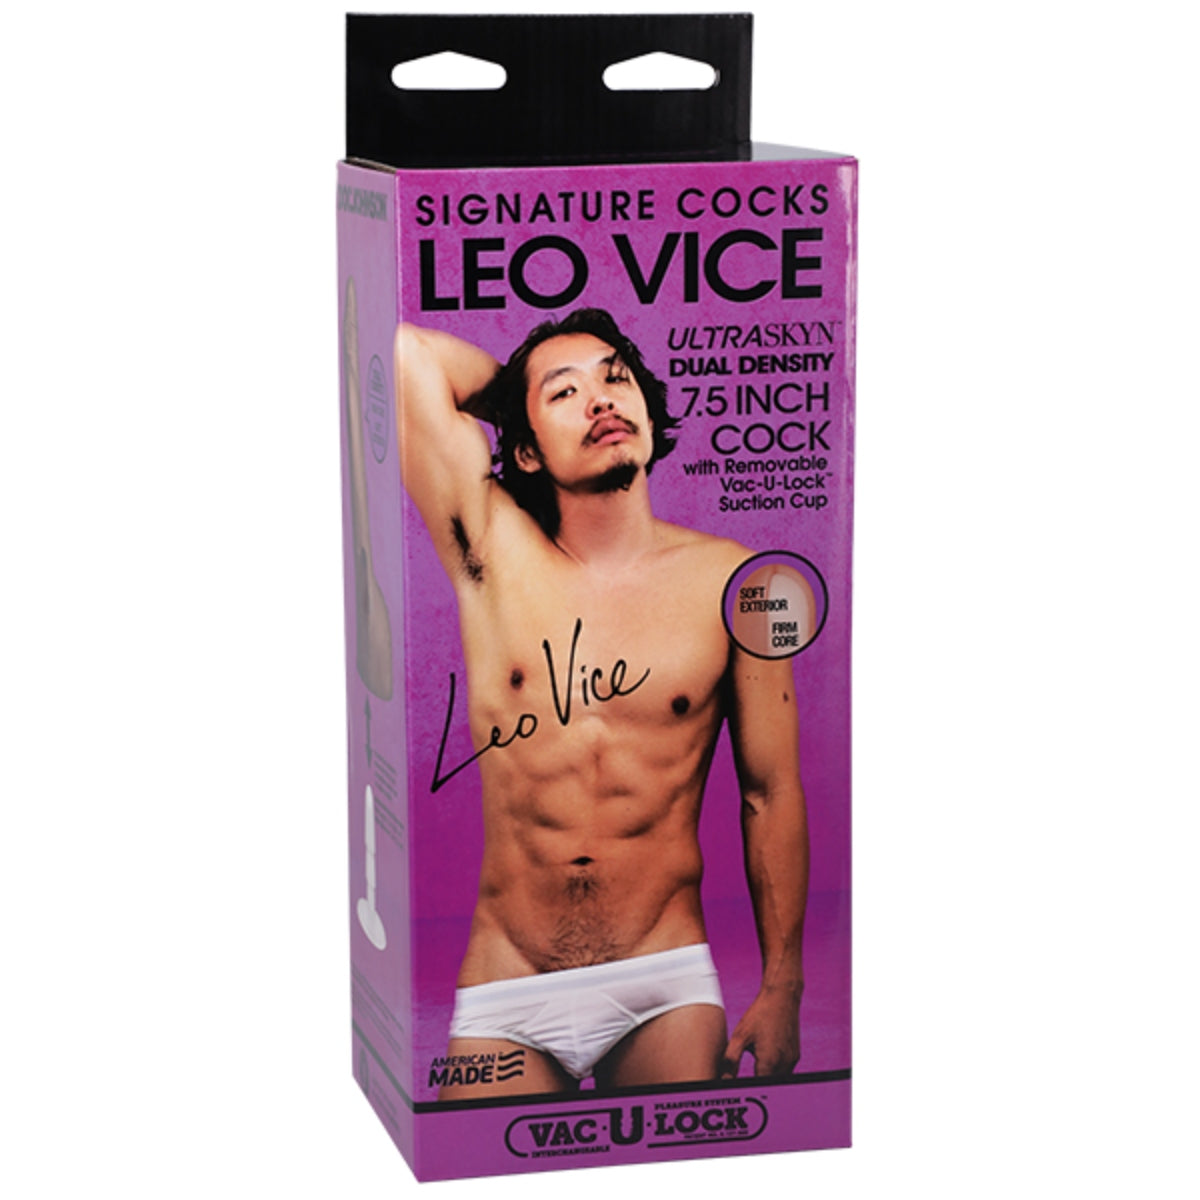 Signature Cocks Leo Vice Ultraskyn Vac-U-Lock Dildo Pink 7.5 Inch